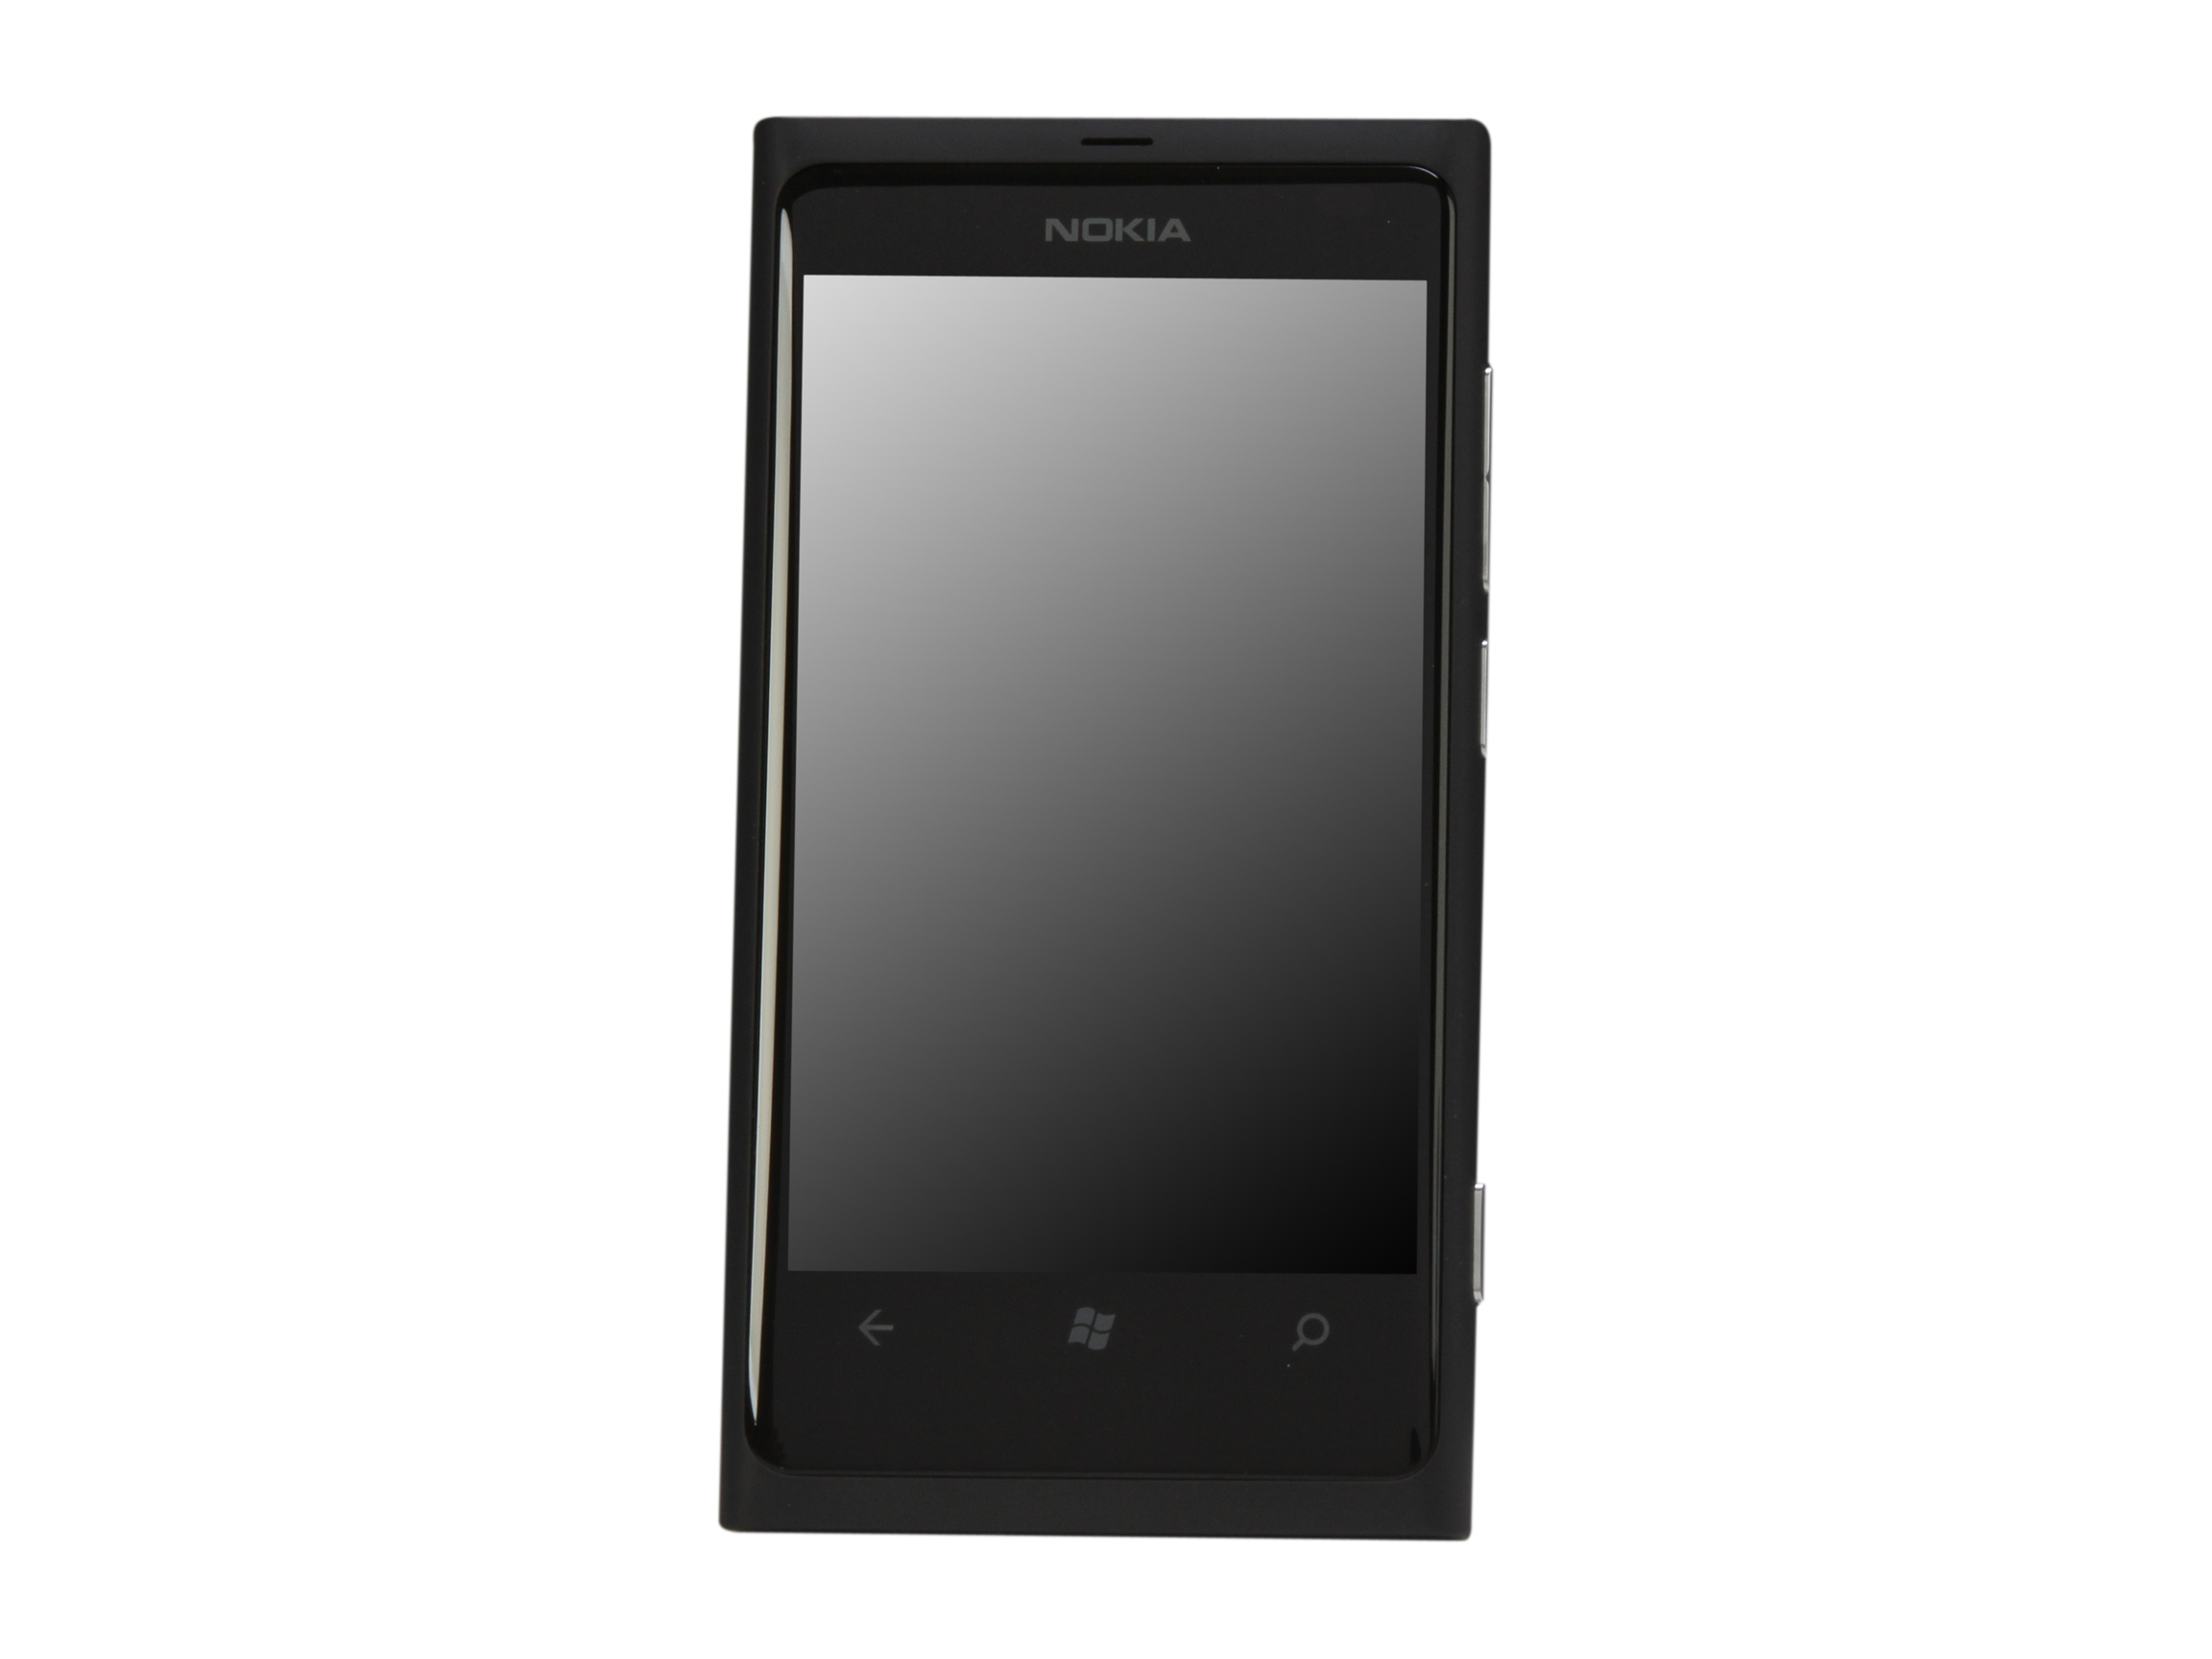 Nokia Lumia 800 Black 3G Single Core 1.4GHz 16GB Unlocked GSM Windows Smart Phone w/ Windows Phone 7.5 Mango / 8 MP Camera